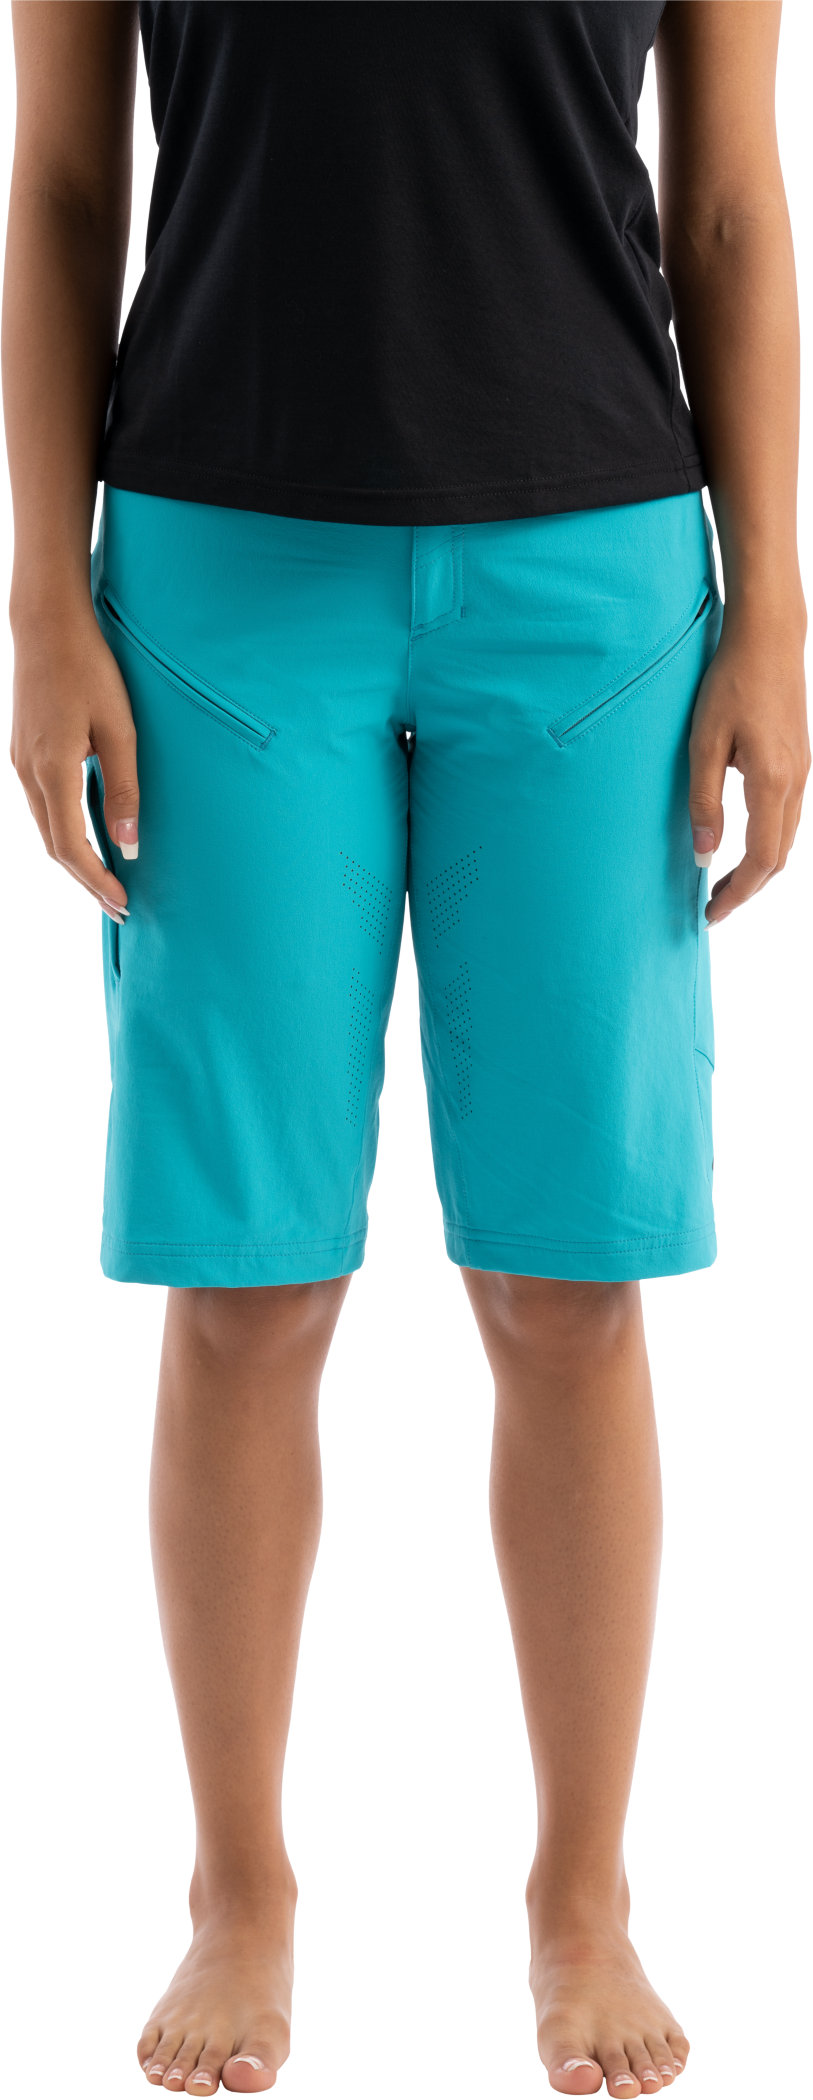 specialized andorra shorts